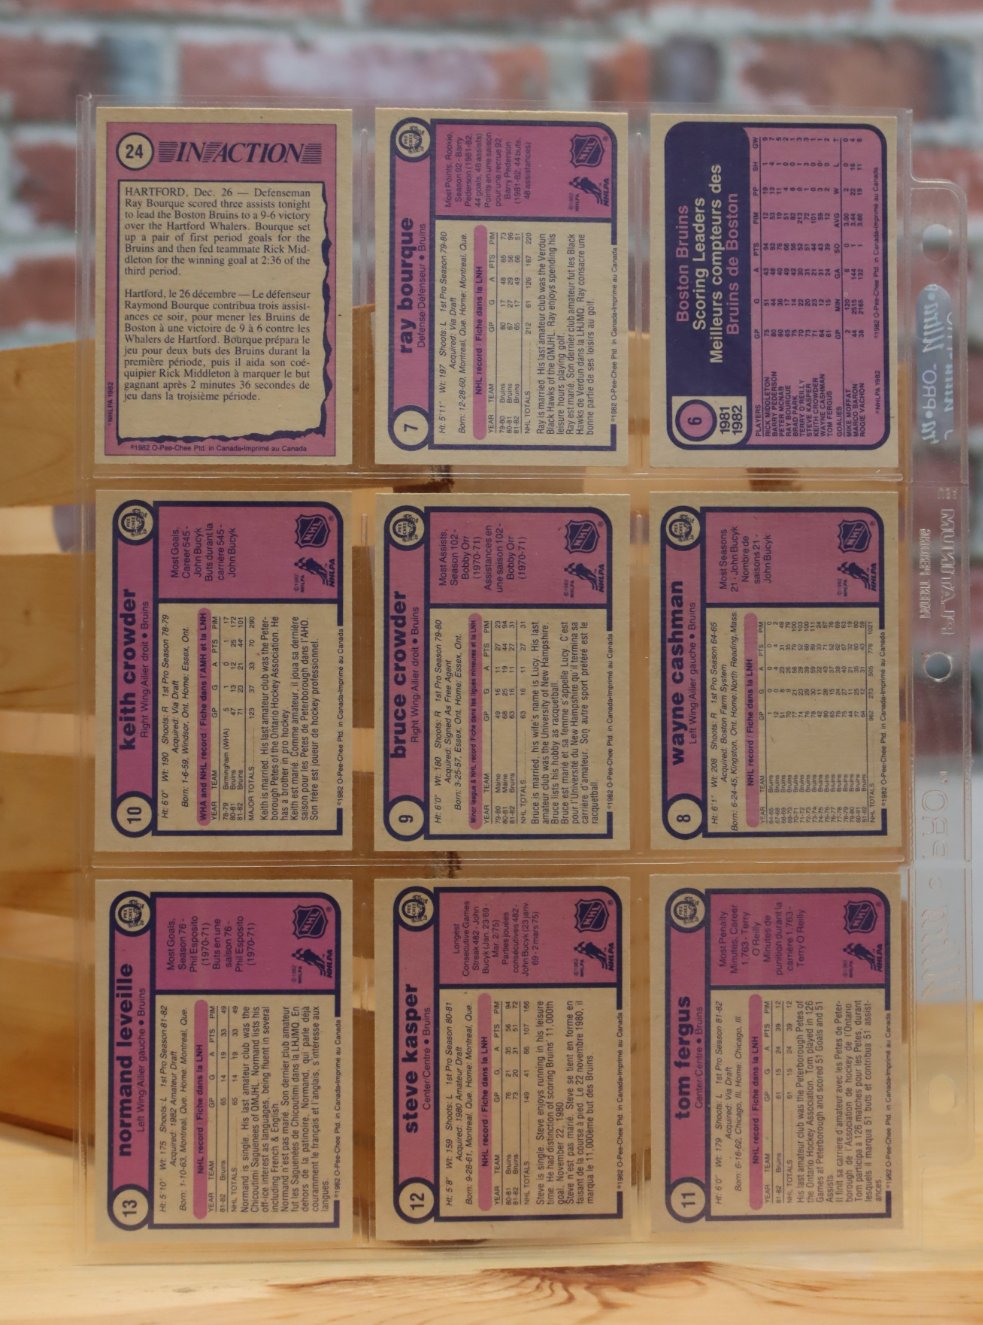 1982/83 OPC O-Pee-Chee Hockey Card Complete Set